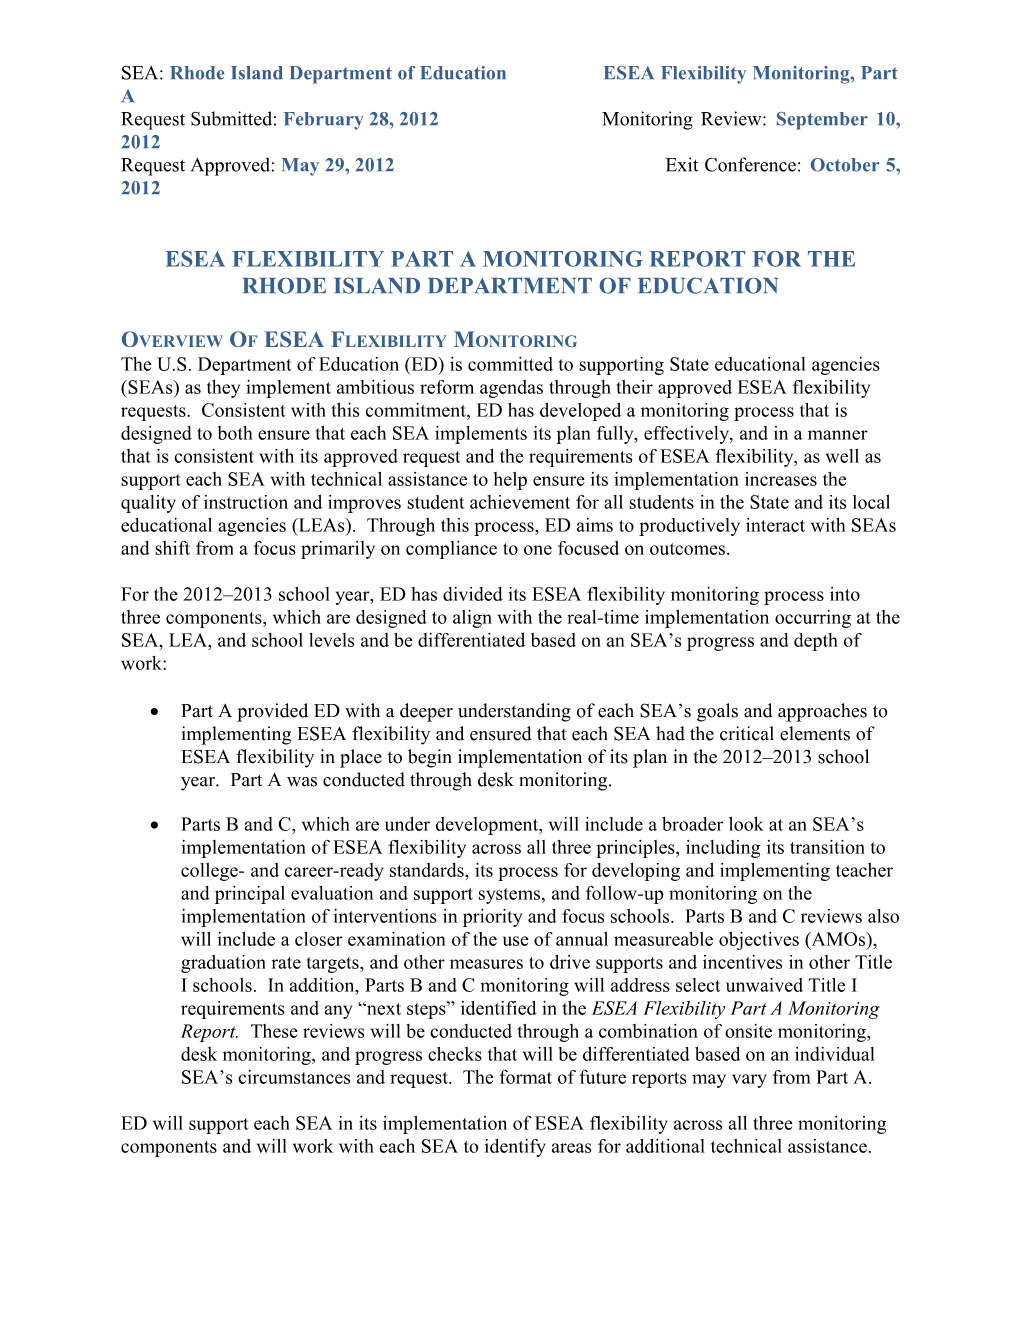 Rhode Island ESEA Flexibility Monitoring Part a Report